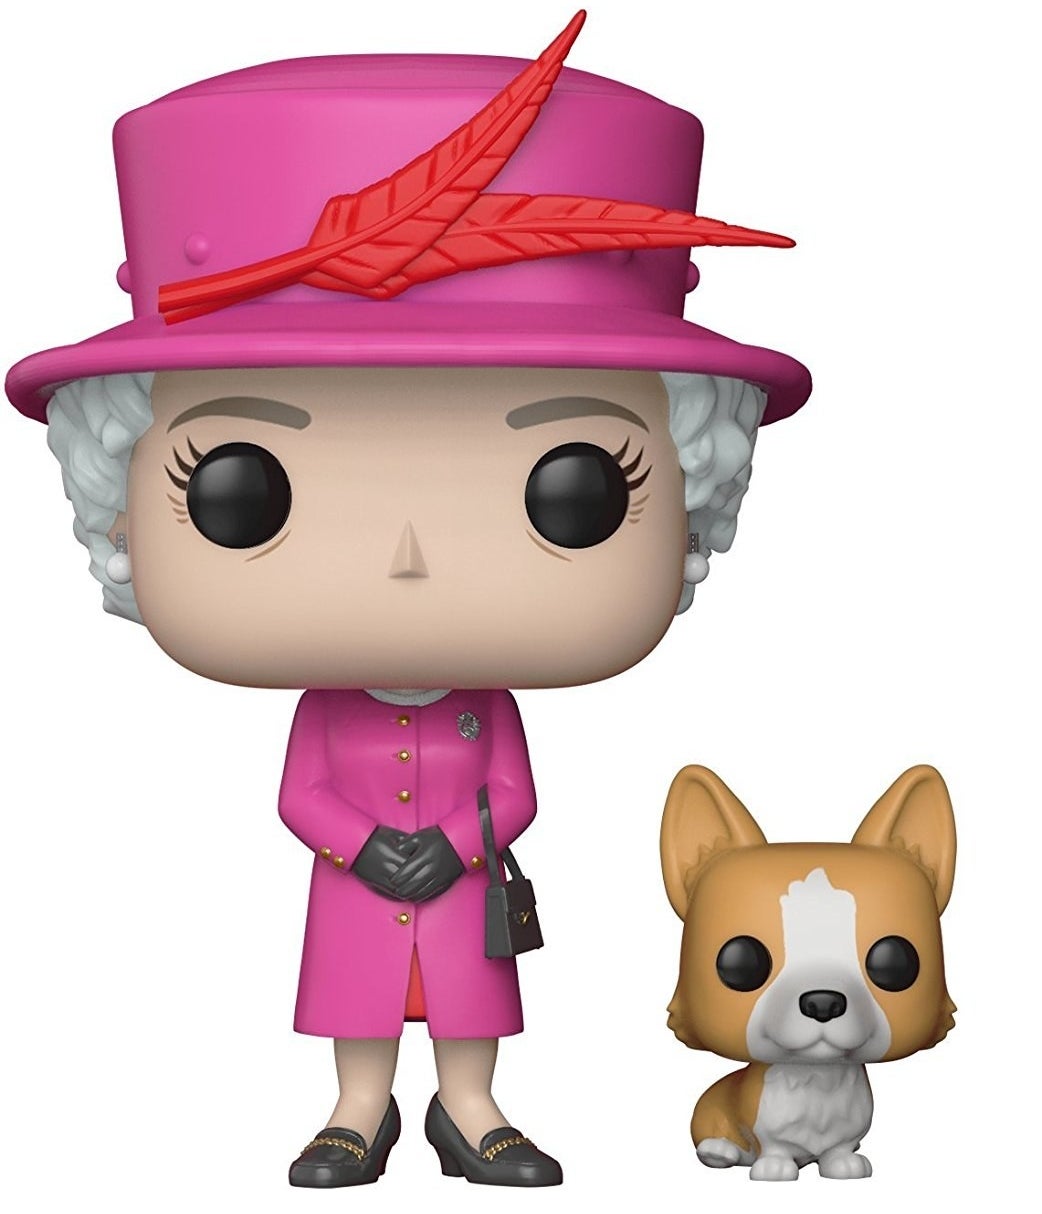 a funko pop of queen elizabeth in a pink coat with a corgi